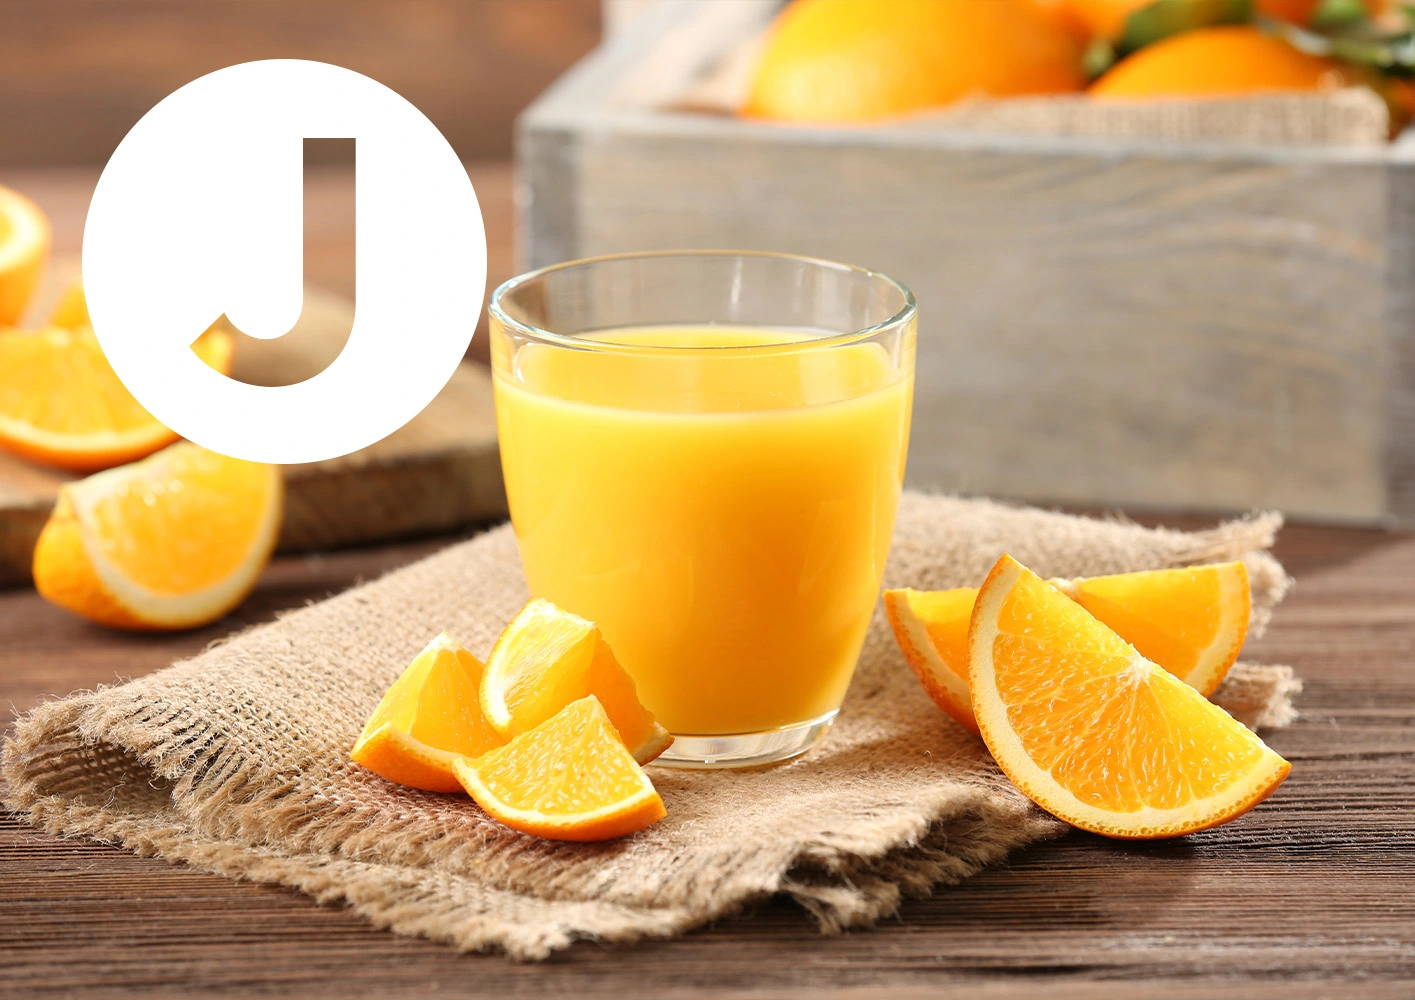 Letter J / Orange juice.